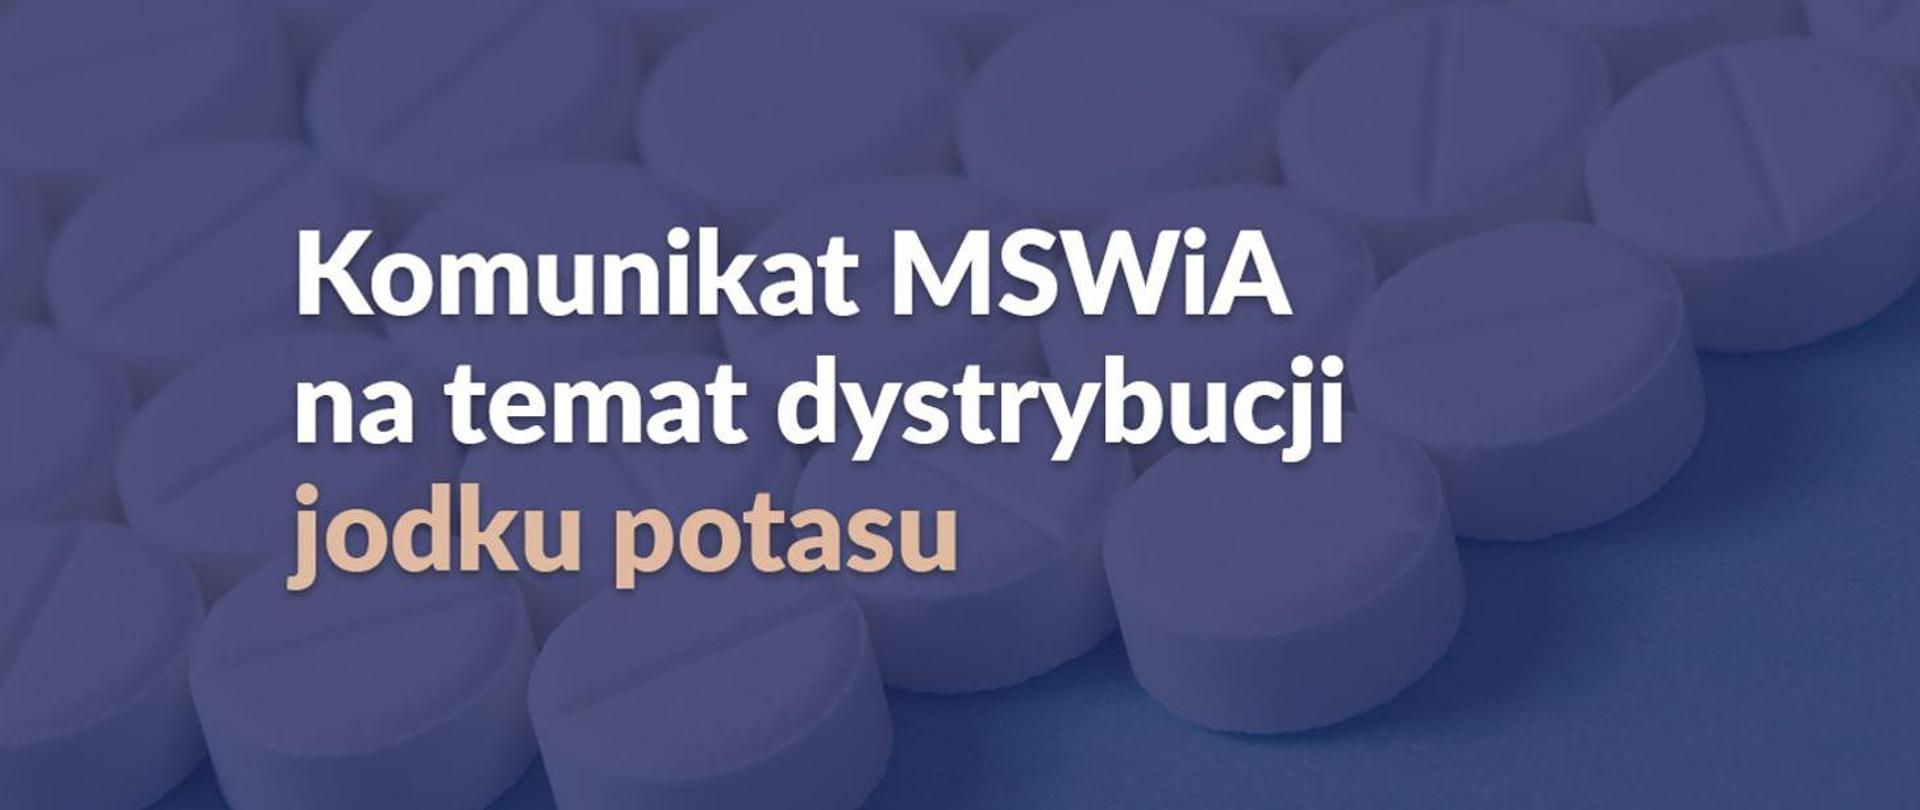 Komunikat MSWiA na temat dystrybucji jodku potasu napis